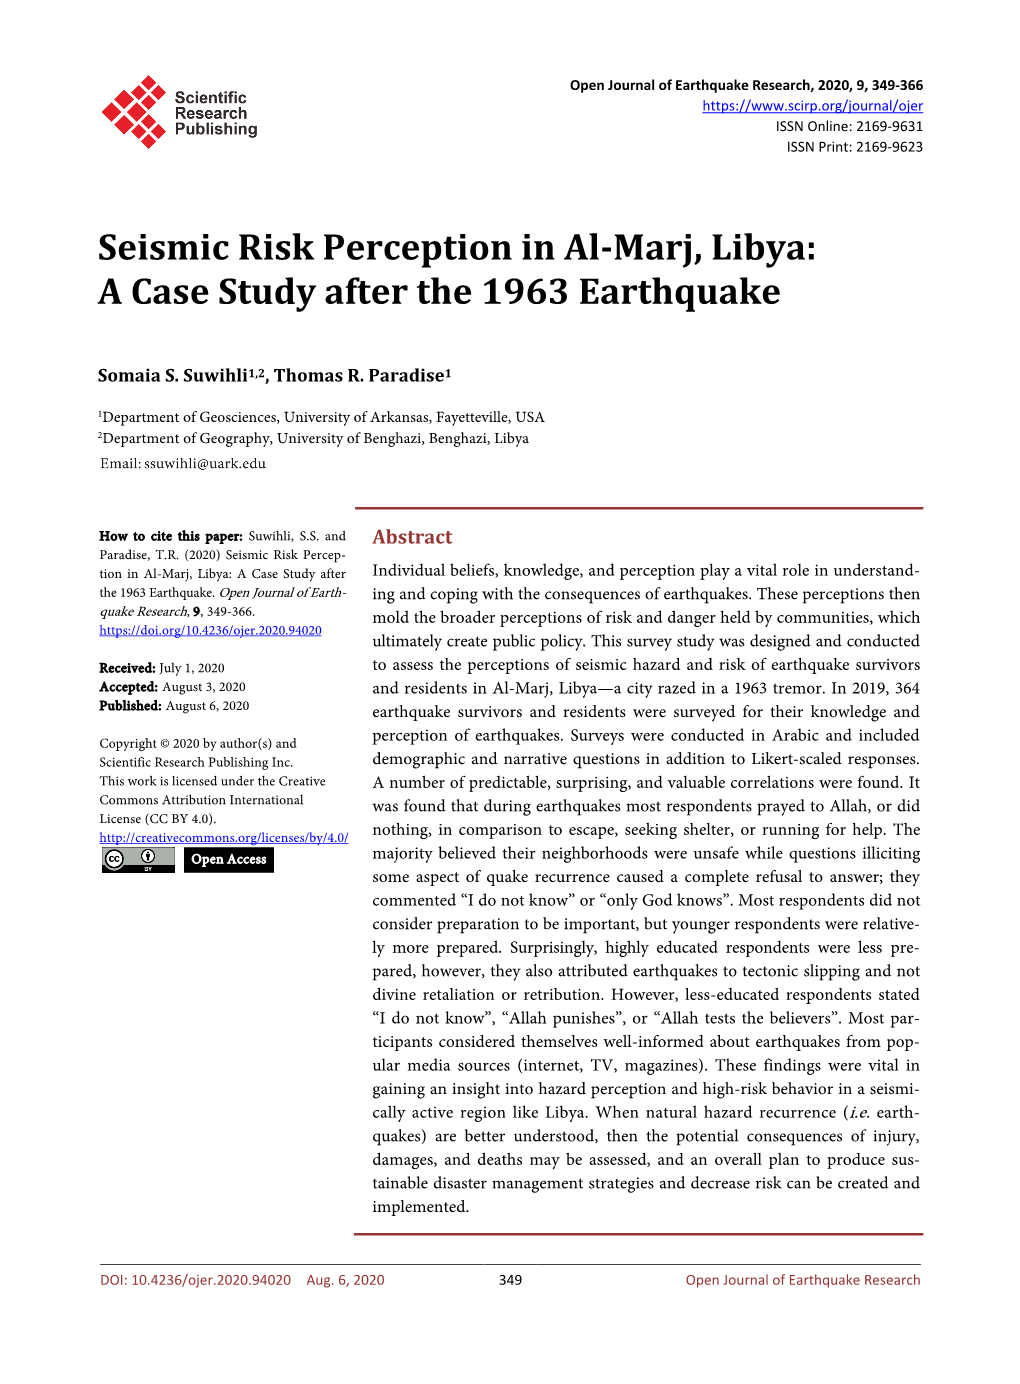 Seismic Risk Perception in Al-Marj, Libya: a Case Study After the 1963 Earthquake